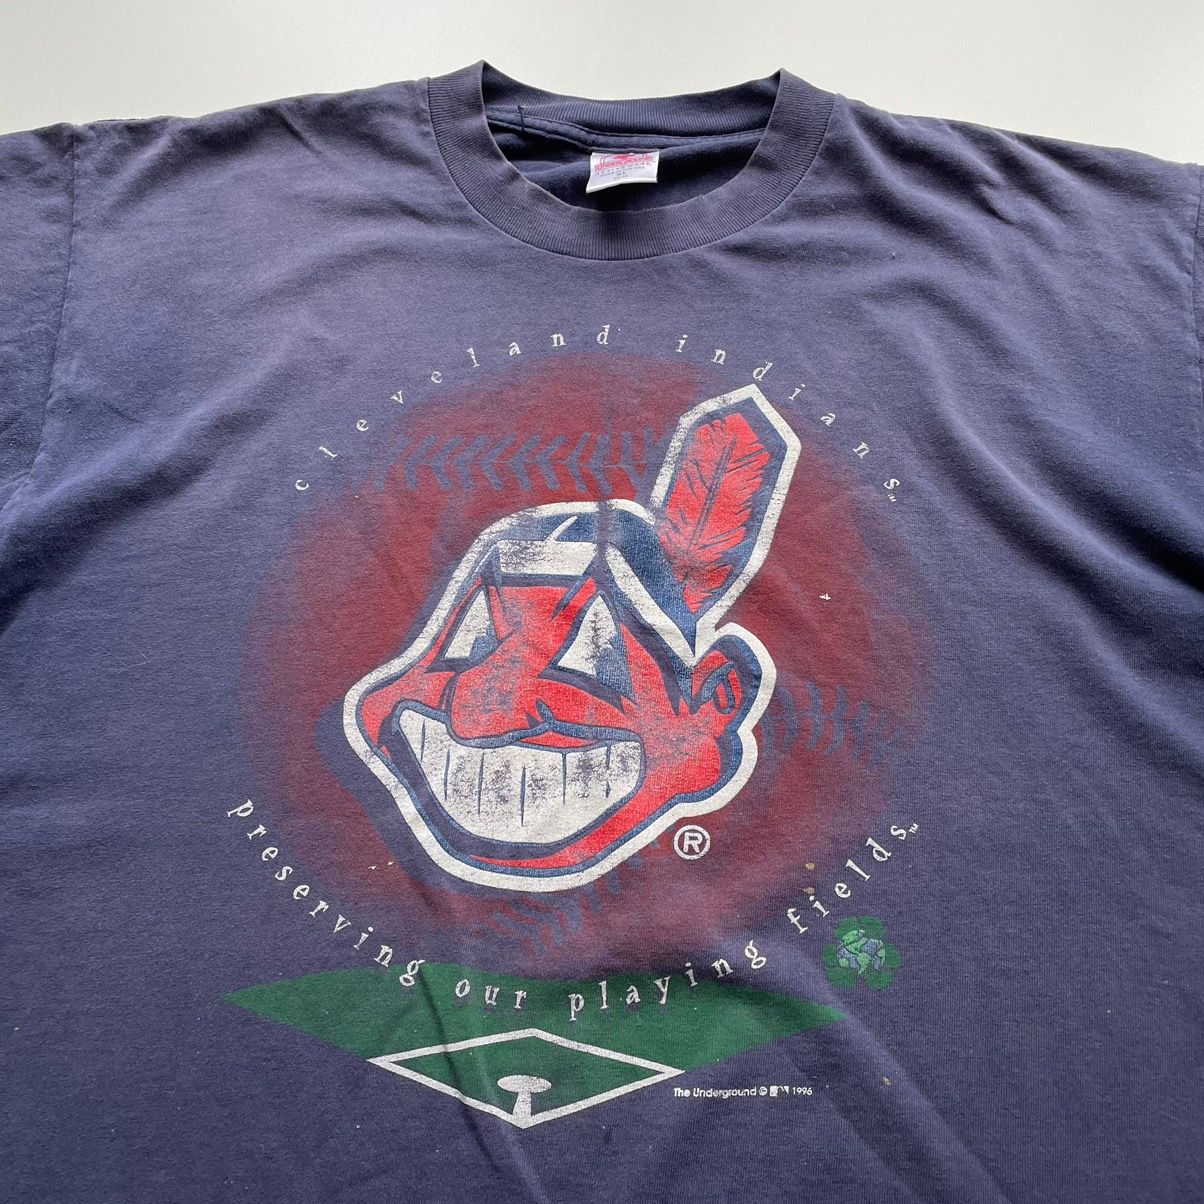 Vintage Vintage 90s Cleveland Indians MLB baseball graphic t shirt Size US XL / EU 56 / 4 - 2 Preview